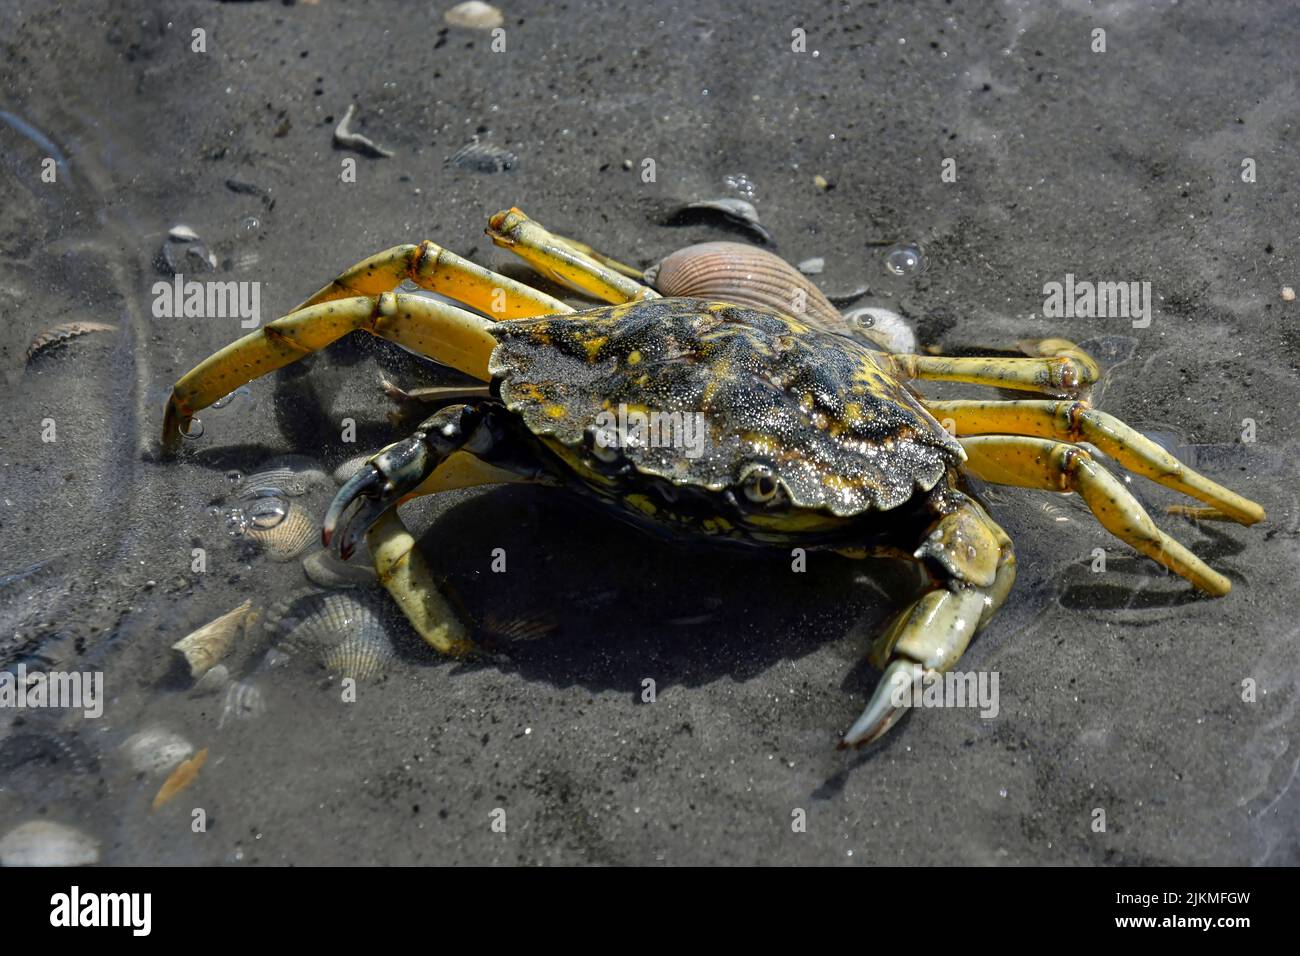 Small crab crawling on stony ground Stock Photo - Alamy